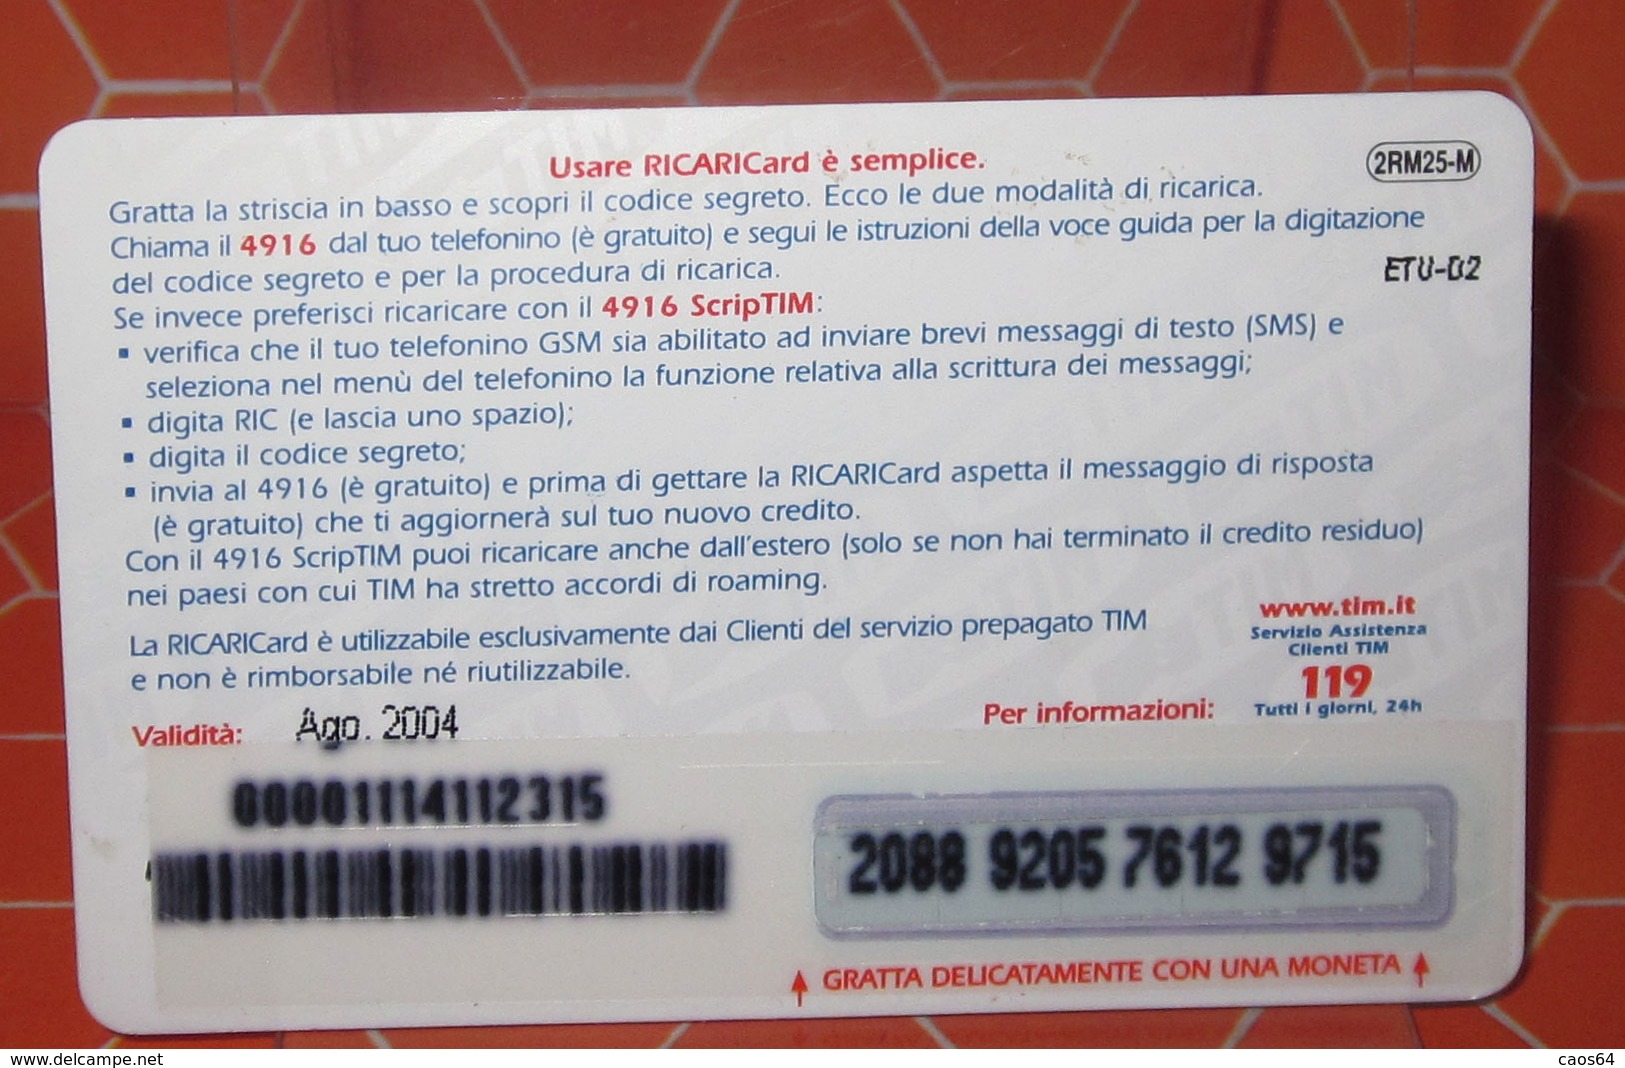 ROMA 2002  TIM € 25 TIM   SCHEDA  TELEFONICA PREPAGATA  USED - Schede GSM, Prepagate & Ricariche